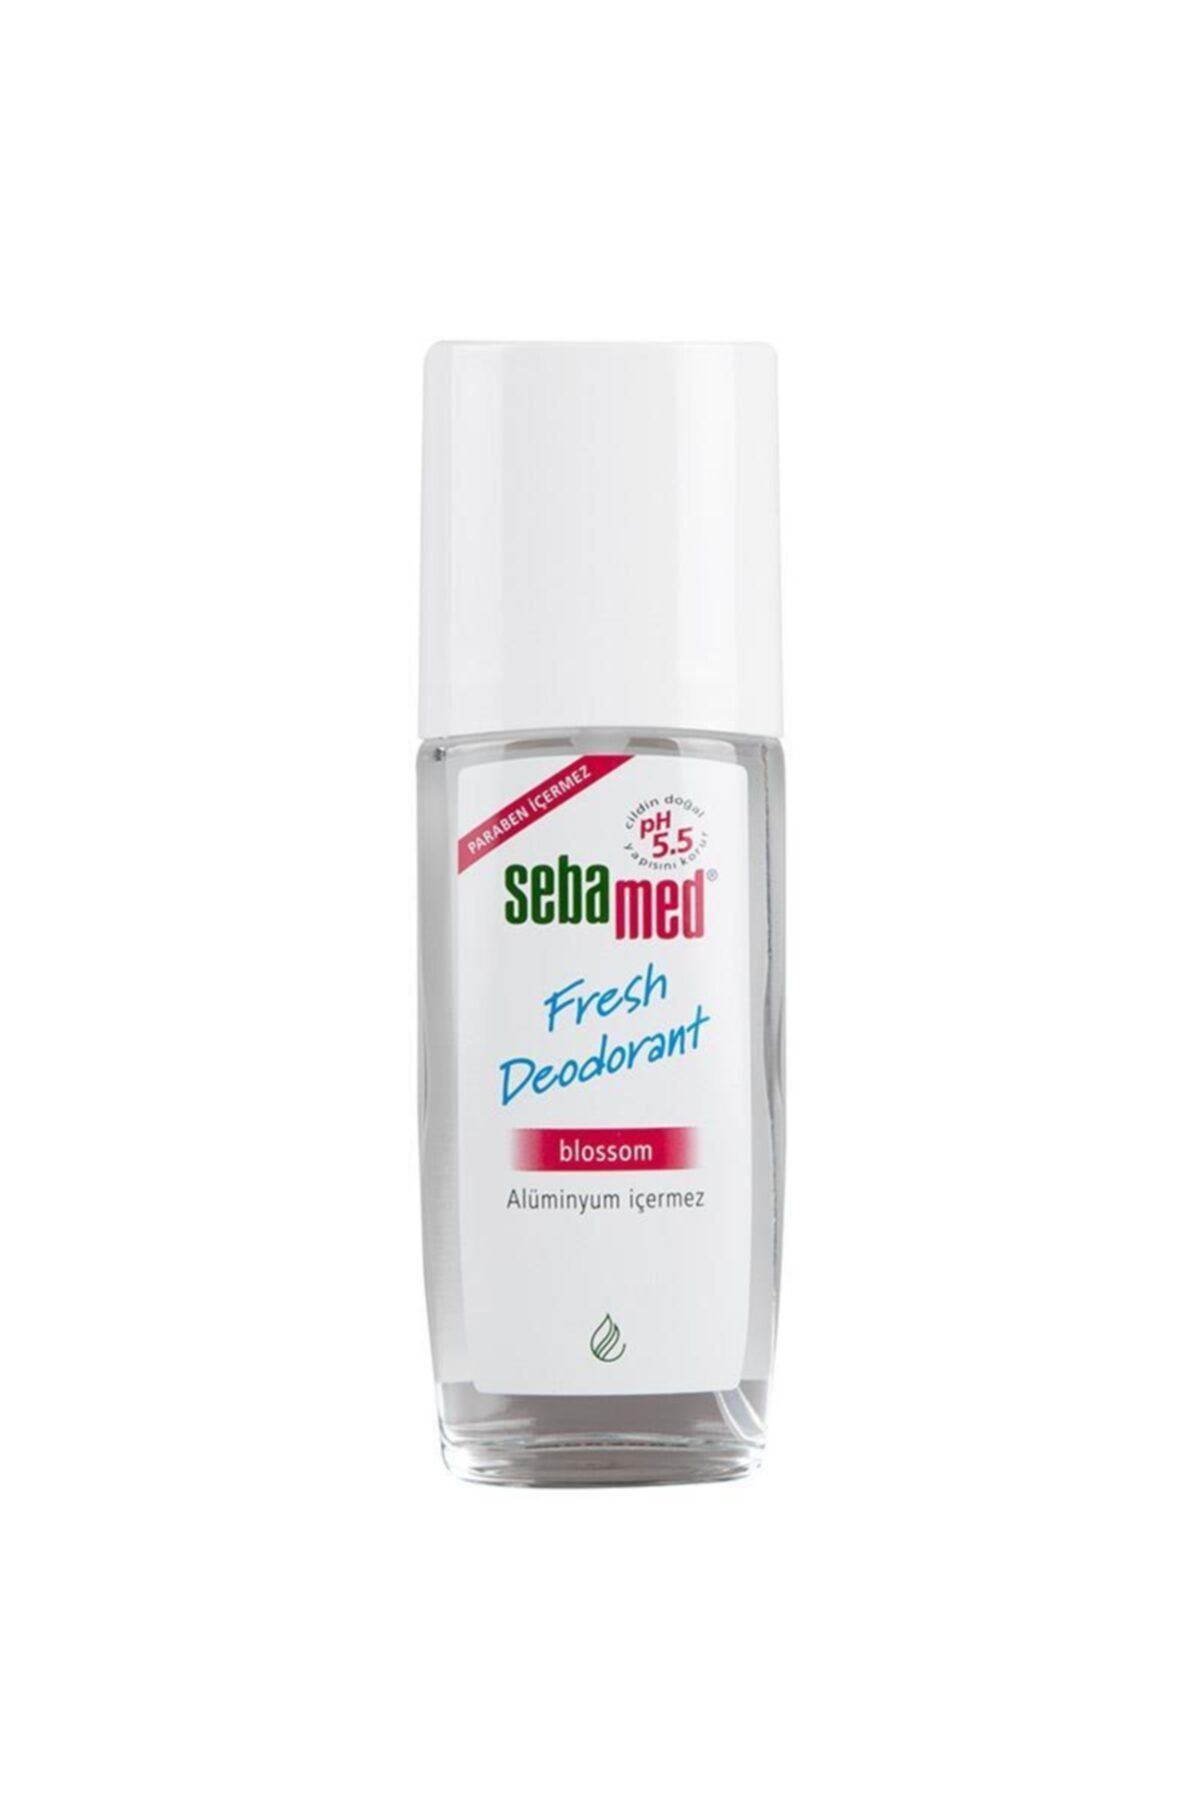 Sebamed Blossom Sprey Deodorant Kadınlara Özel 75 ml